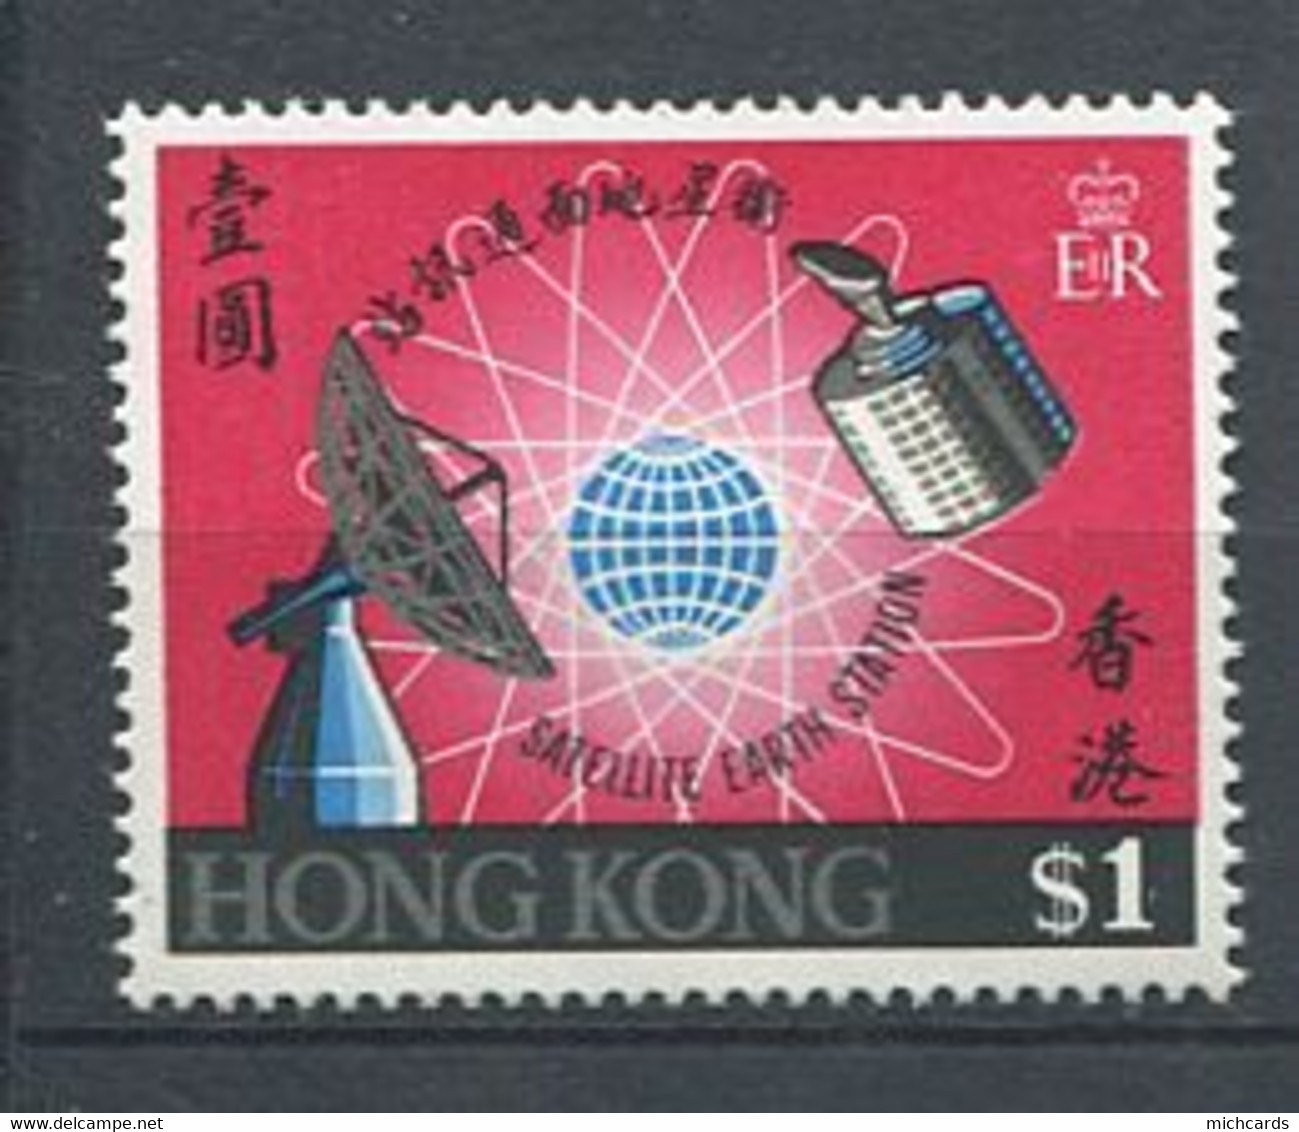 232 HONG KONG 1969 - Yvert 243 - Station Satellite Communication - Neuf ** (MNH) Sans Trace De Charniere - Nuovi